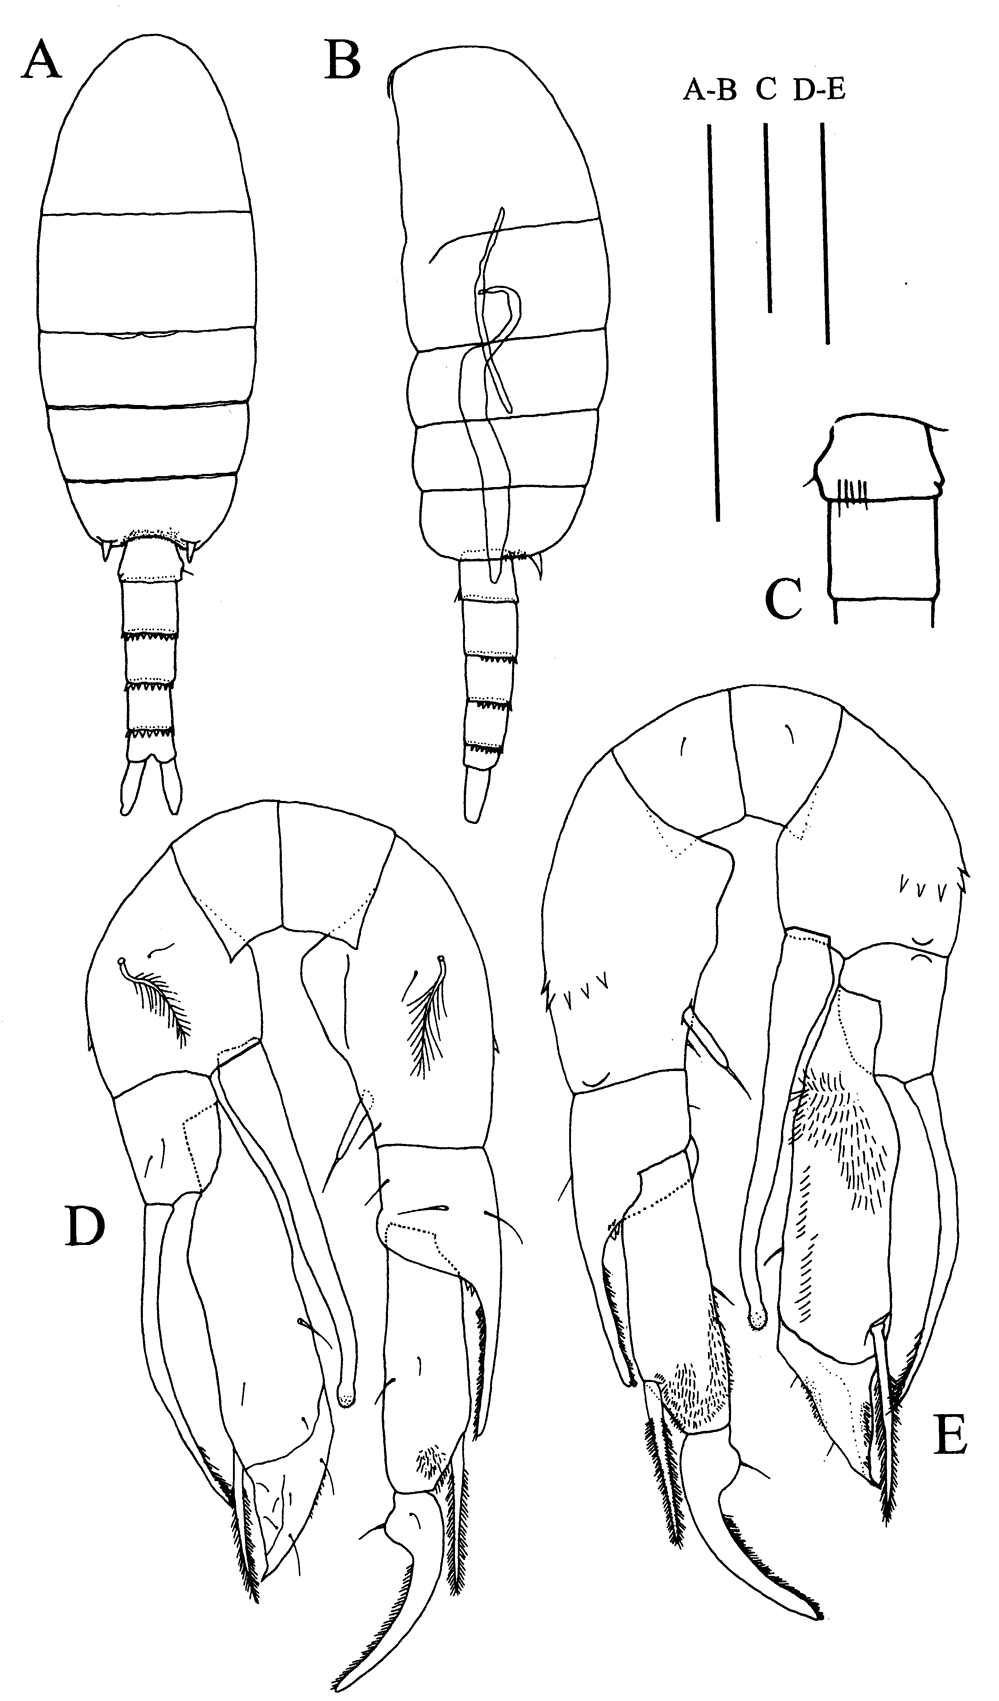 Species Pseudodiaptomus ornatus - Plate 6 of morphological figures